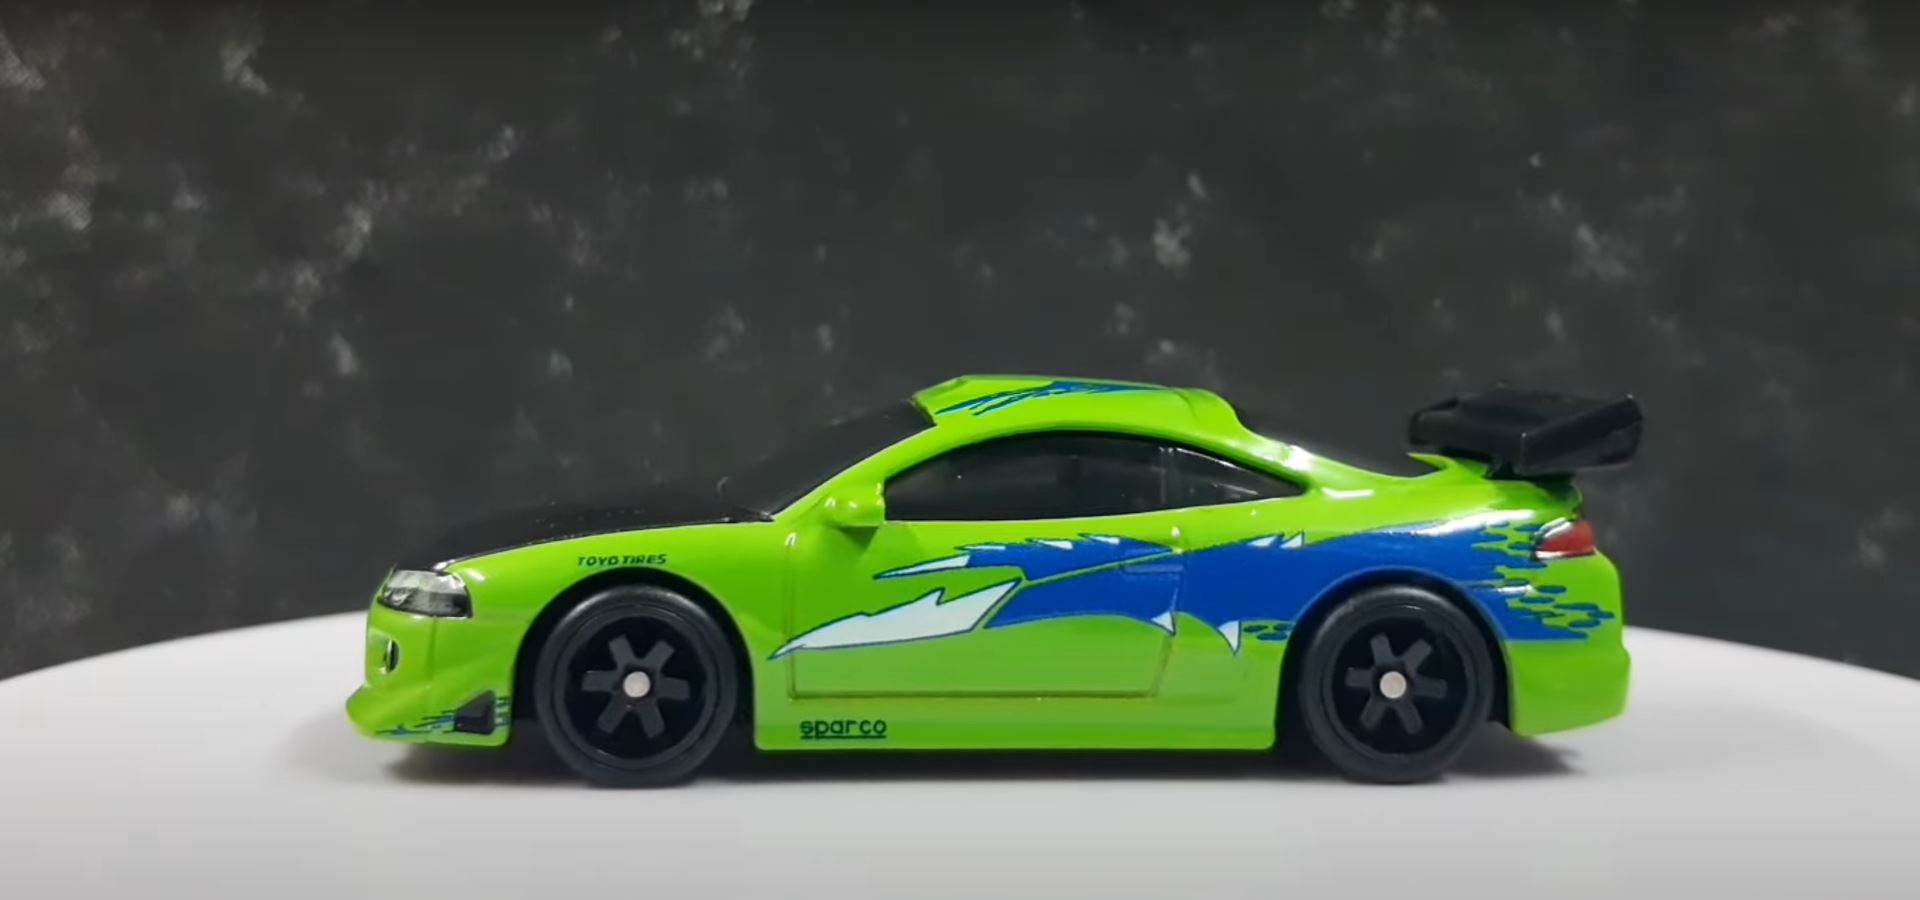 Inside the 2022 Hot Wheels Fast & Furious Set, Brian's Skyline GT